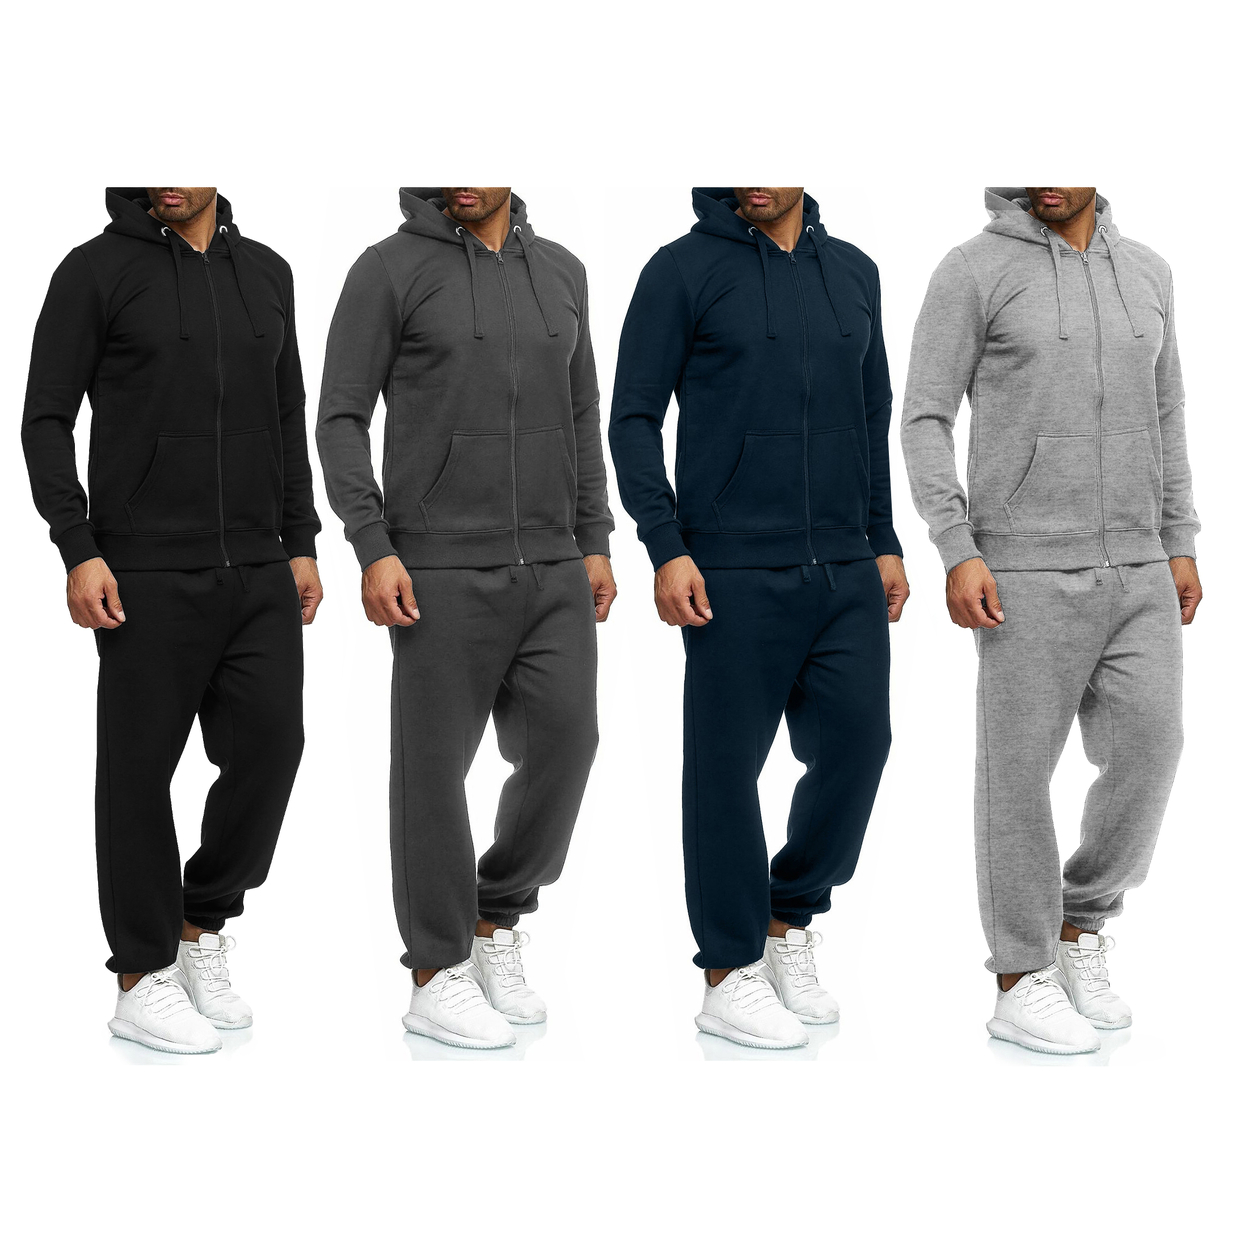 2/4-Piece: Men's Winter Warm Cozy Athletic Multi-Pockets BIG & TALL Sweatsuit Set - Navy, 1, Large